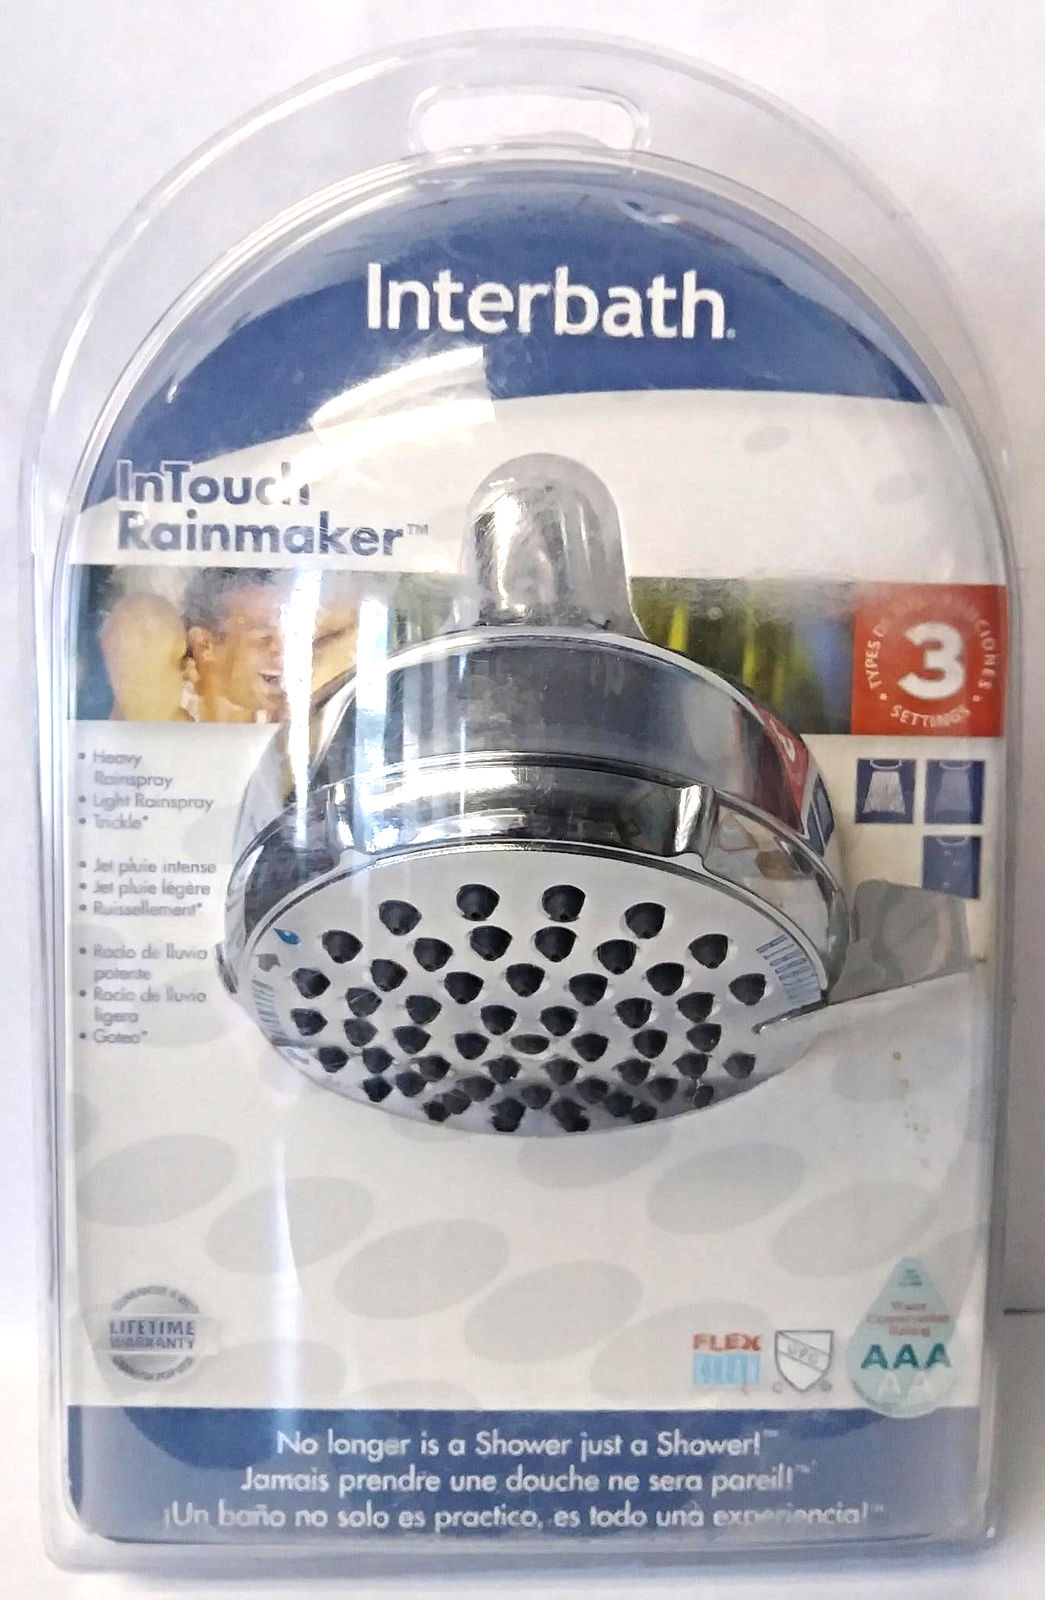 Interbath B1000CH InTouch Rainmaker 3 Settings Shower Head